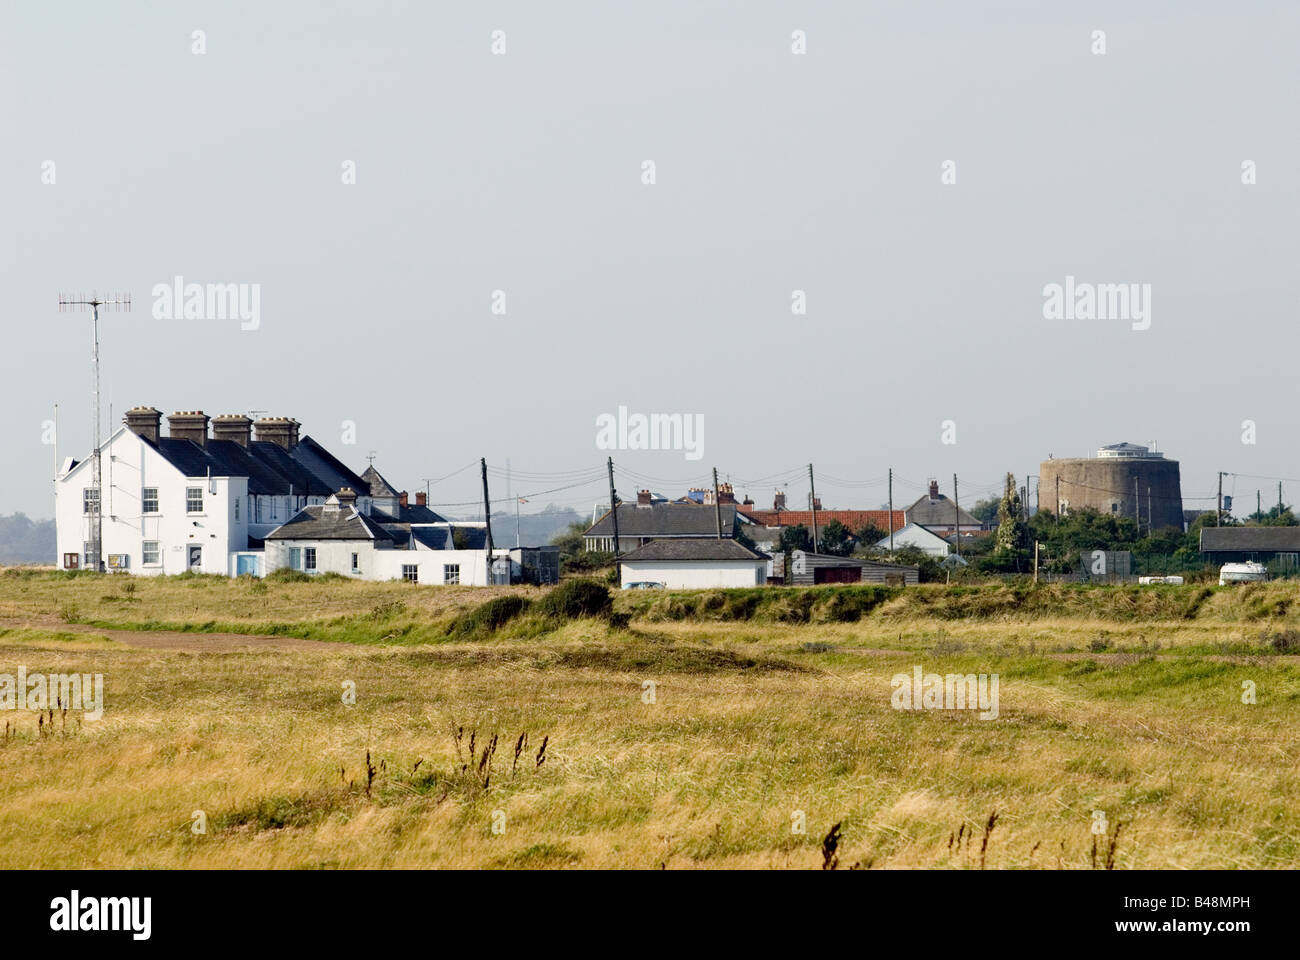 The isolated coastal hamlet of Shingle Street, Suffolk, UK. Stock Photo